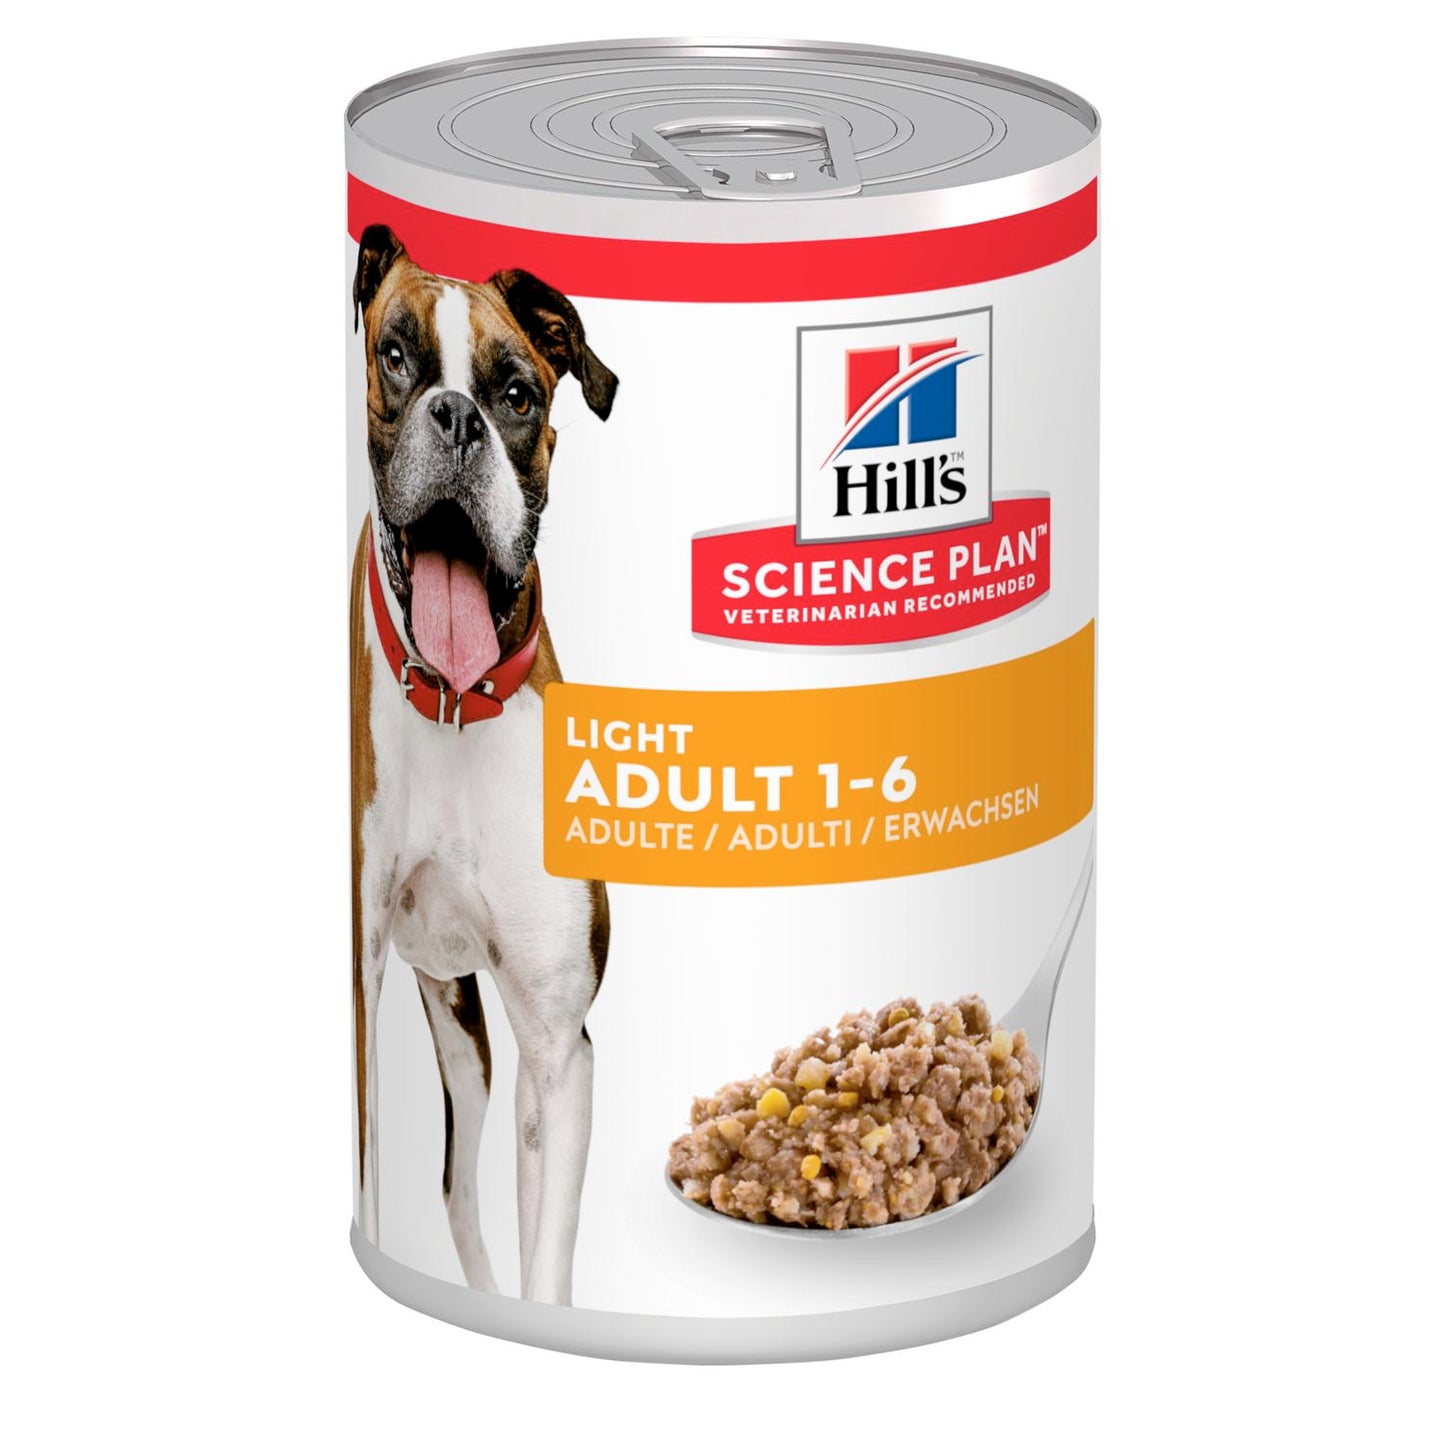 HILL'S SCIENCE PLAN Light Adult Dog Food - Targa Pet Shop